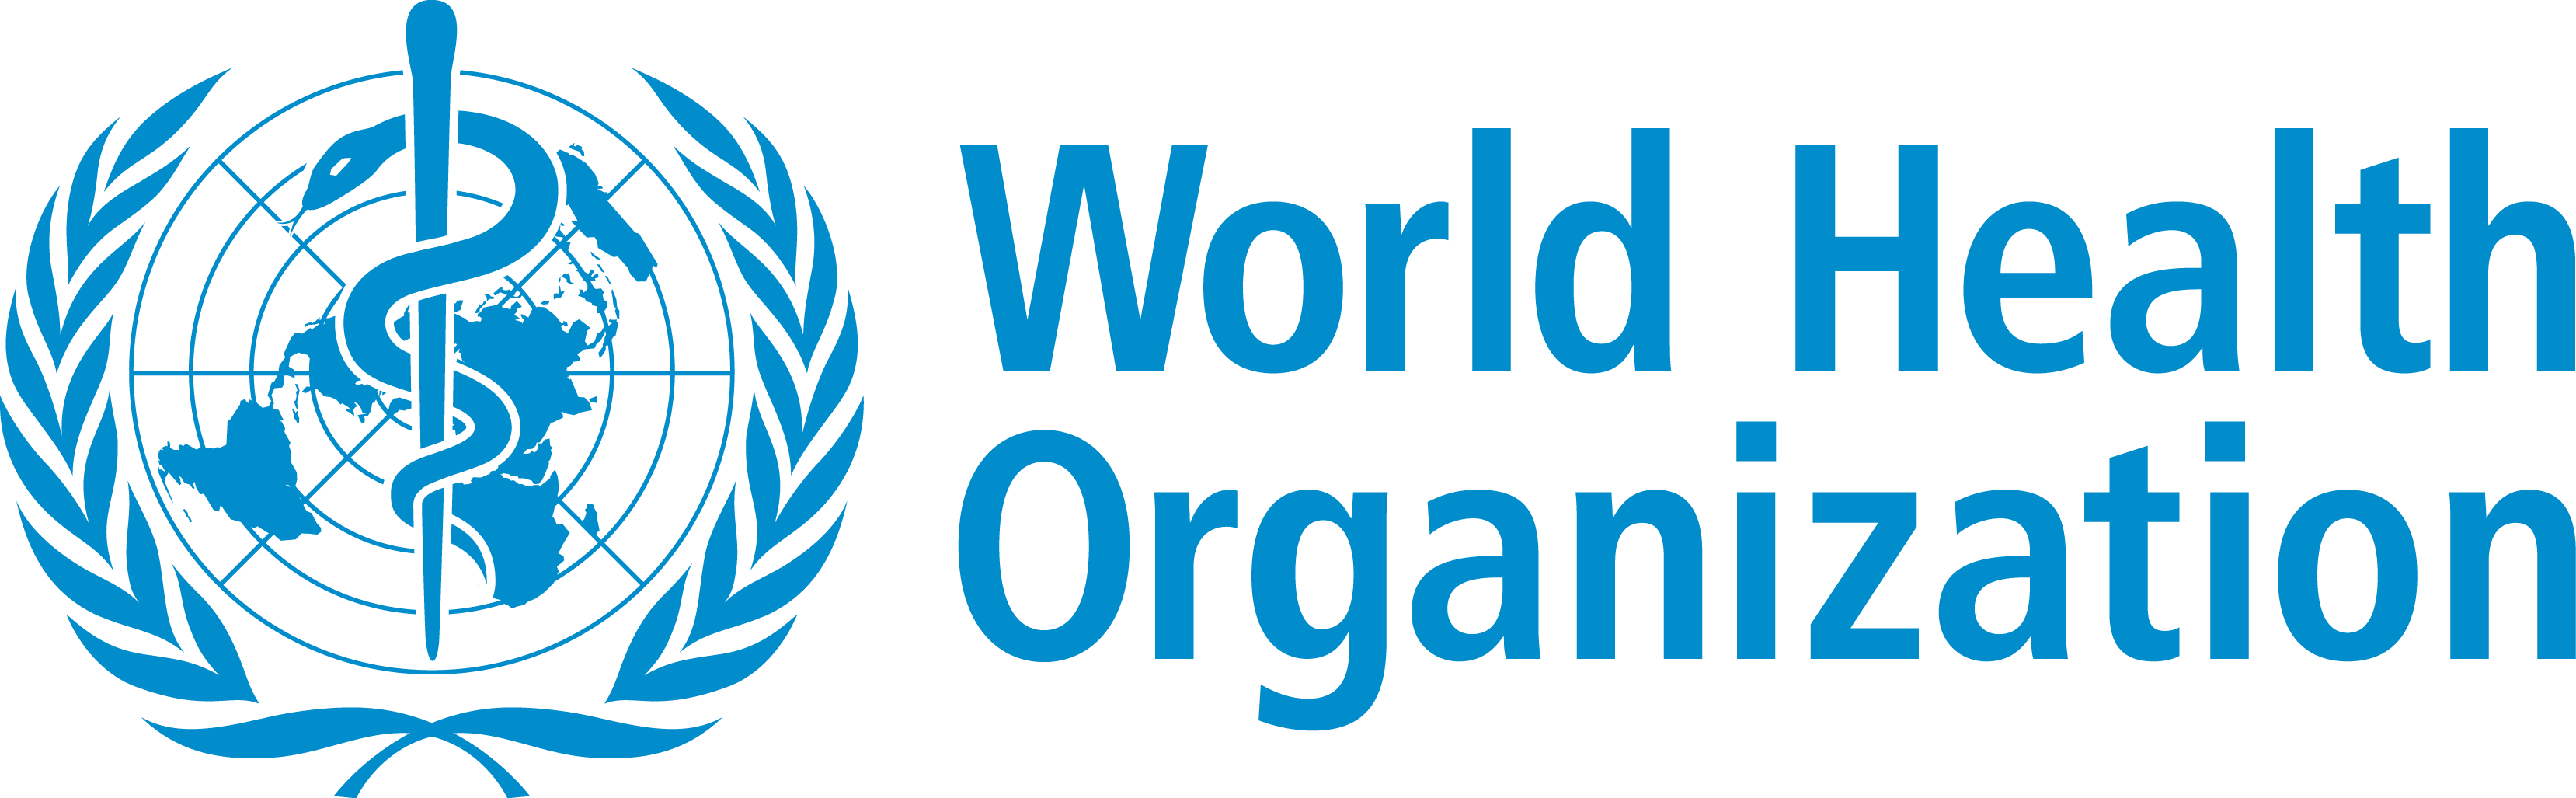 Organization Logo - who-logo-world-health-organization-logo | HeartGenetics, Genetics ...